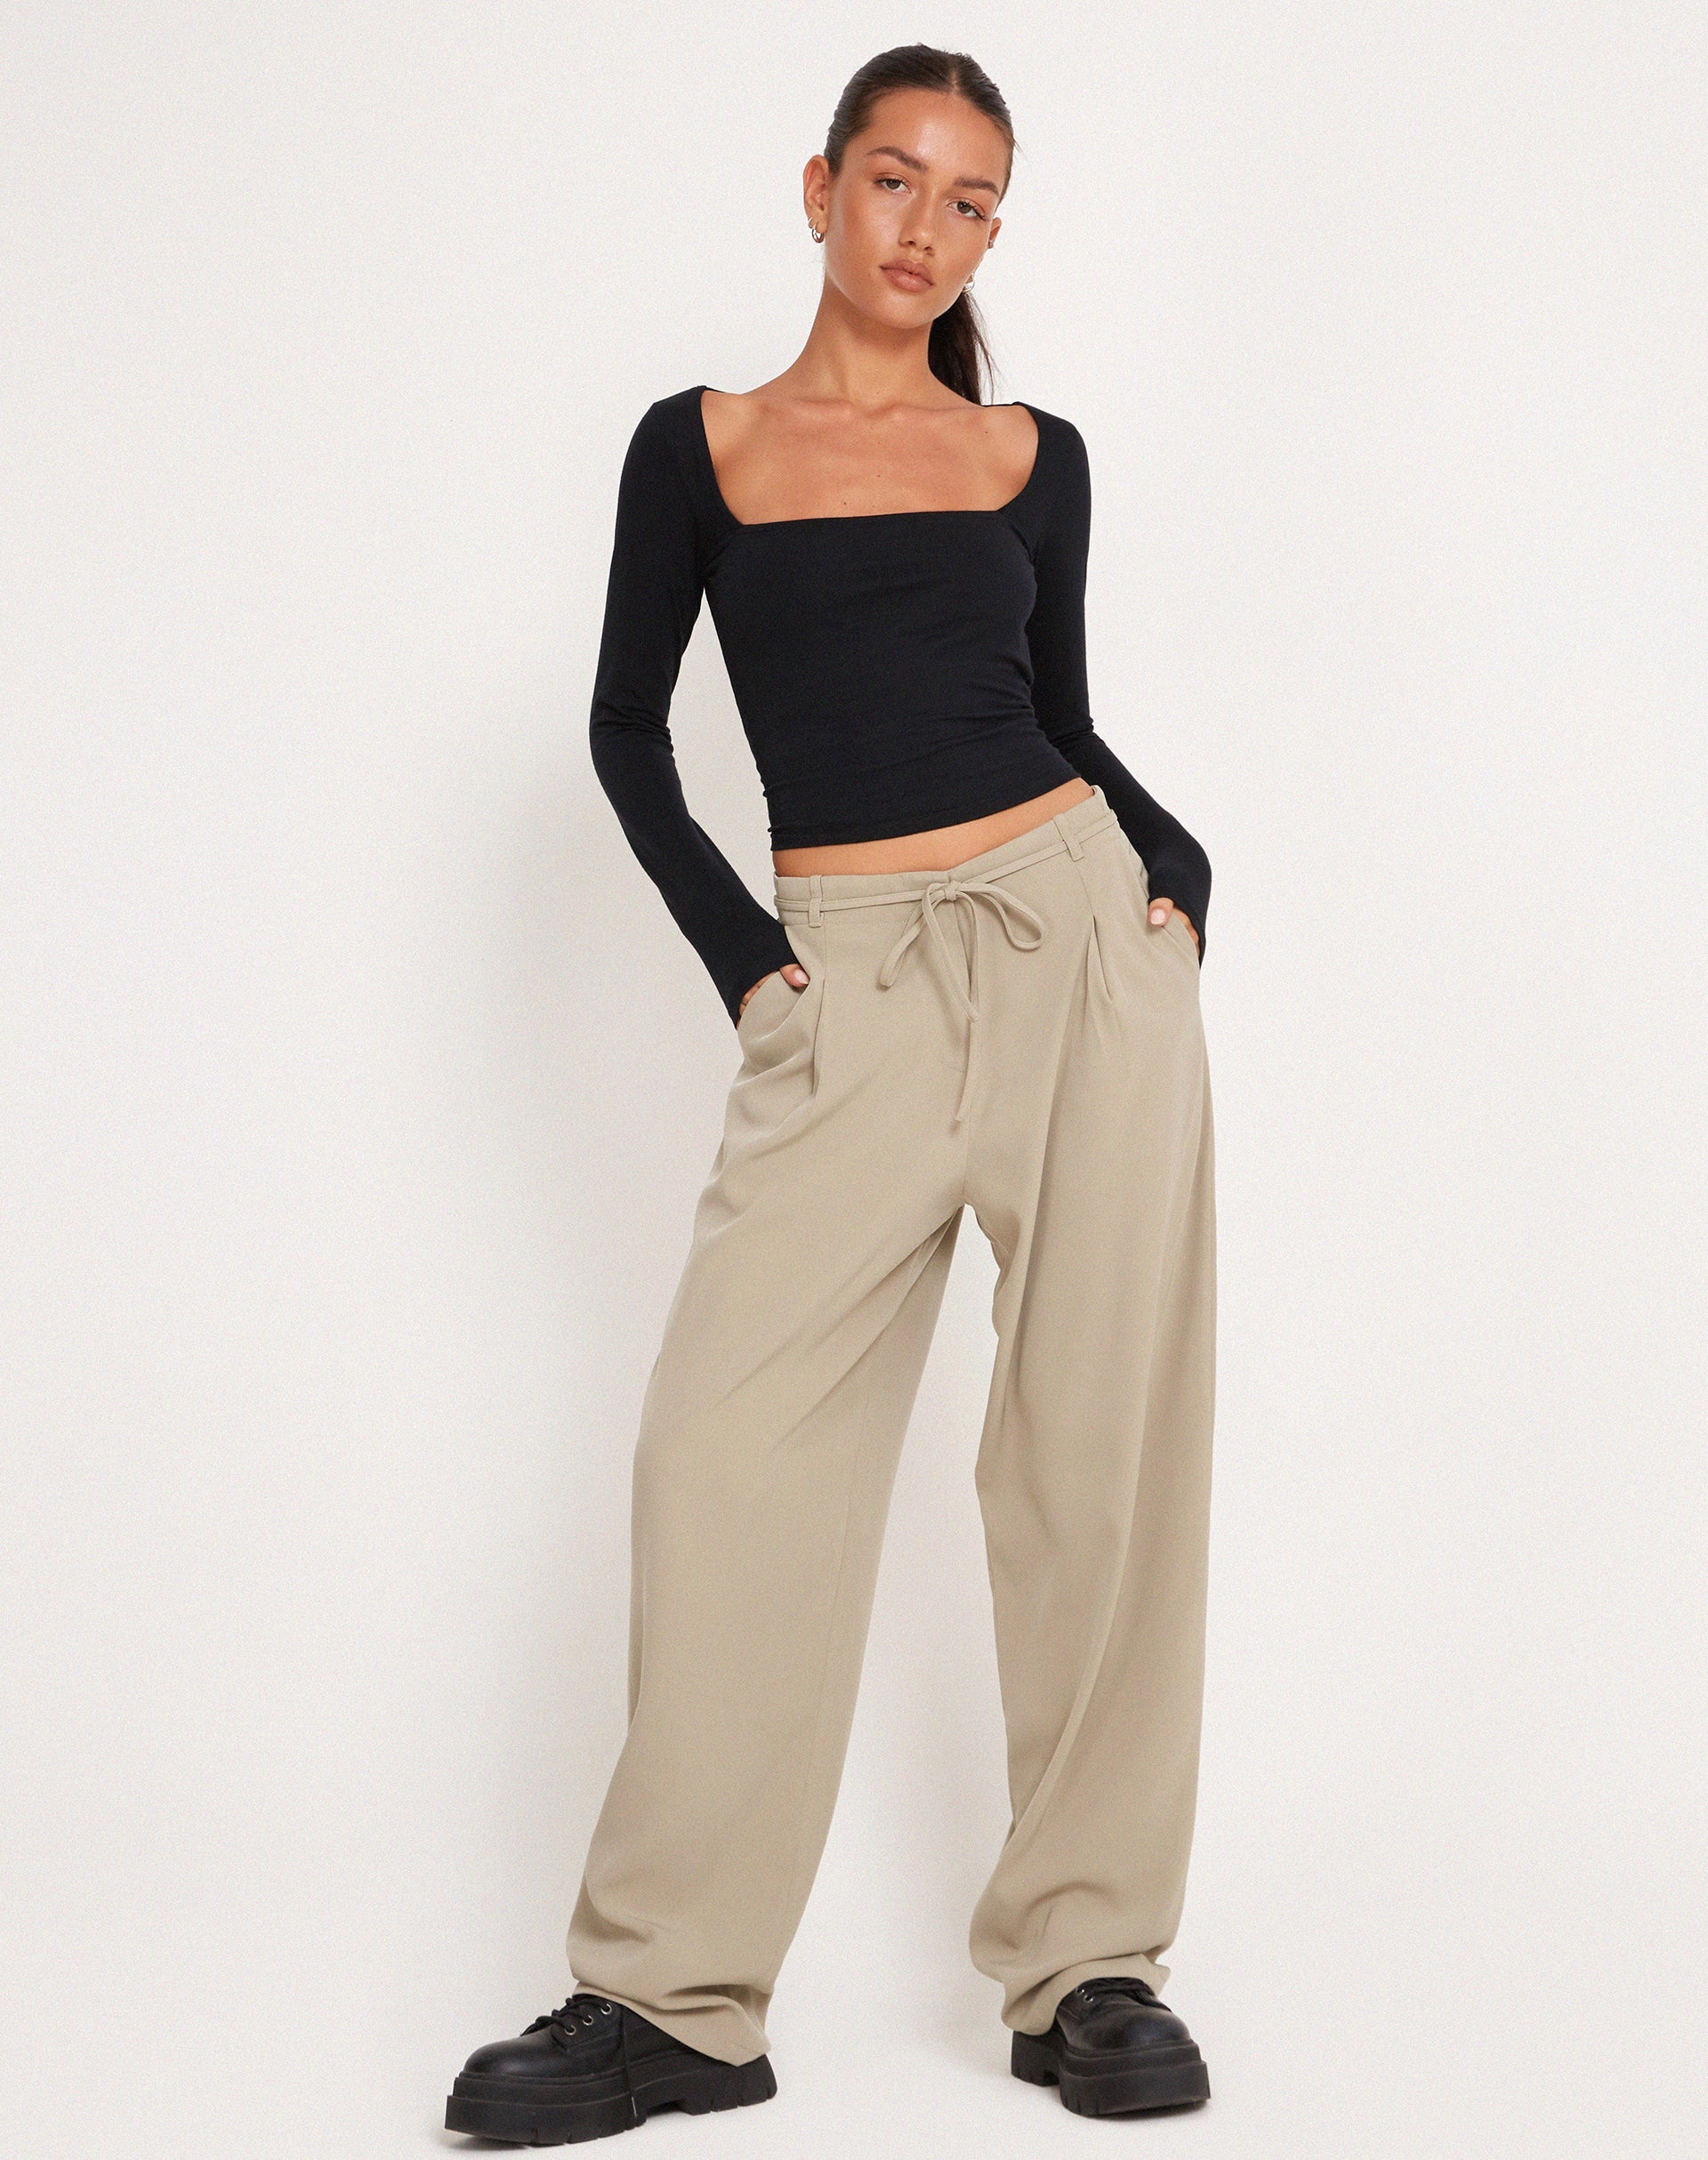 Classic Pants Office Big Size Trousers - Beige - Wholesale Womens Clothing  Vendors For Boutiques